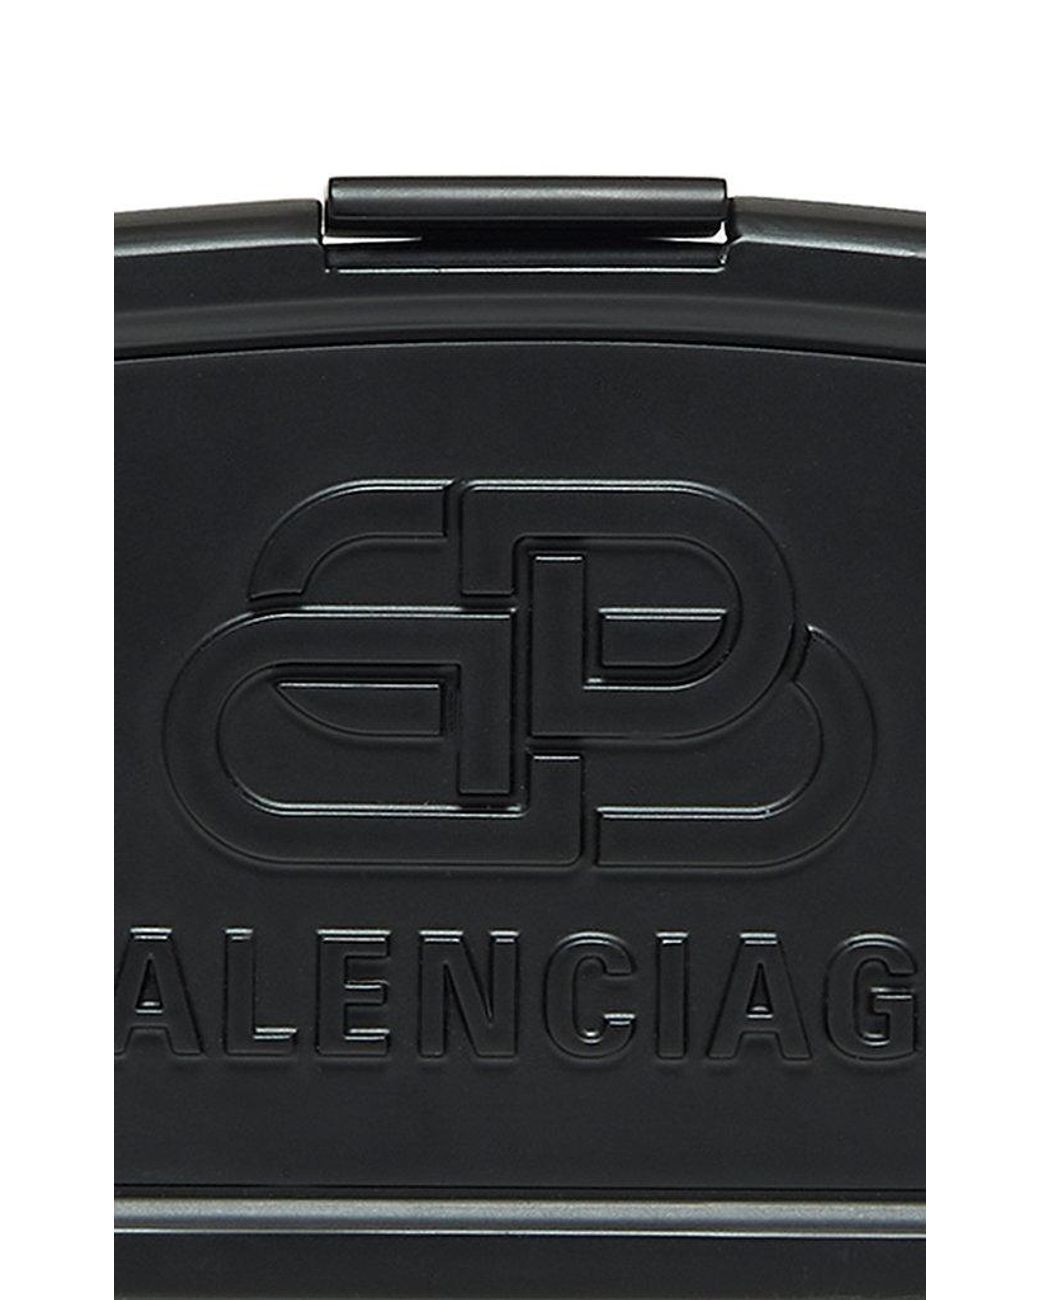 11.11 flash sale !!! Balenciaga lunch box mini bag Condition